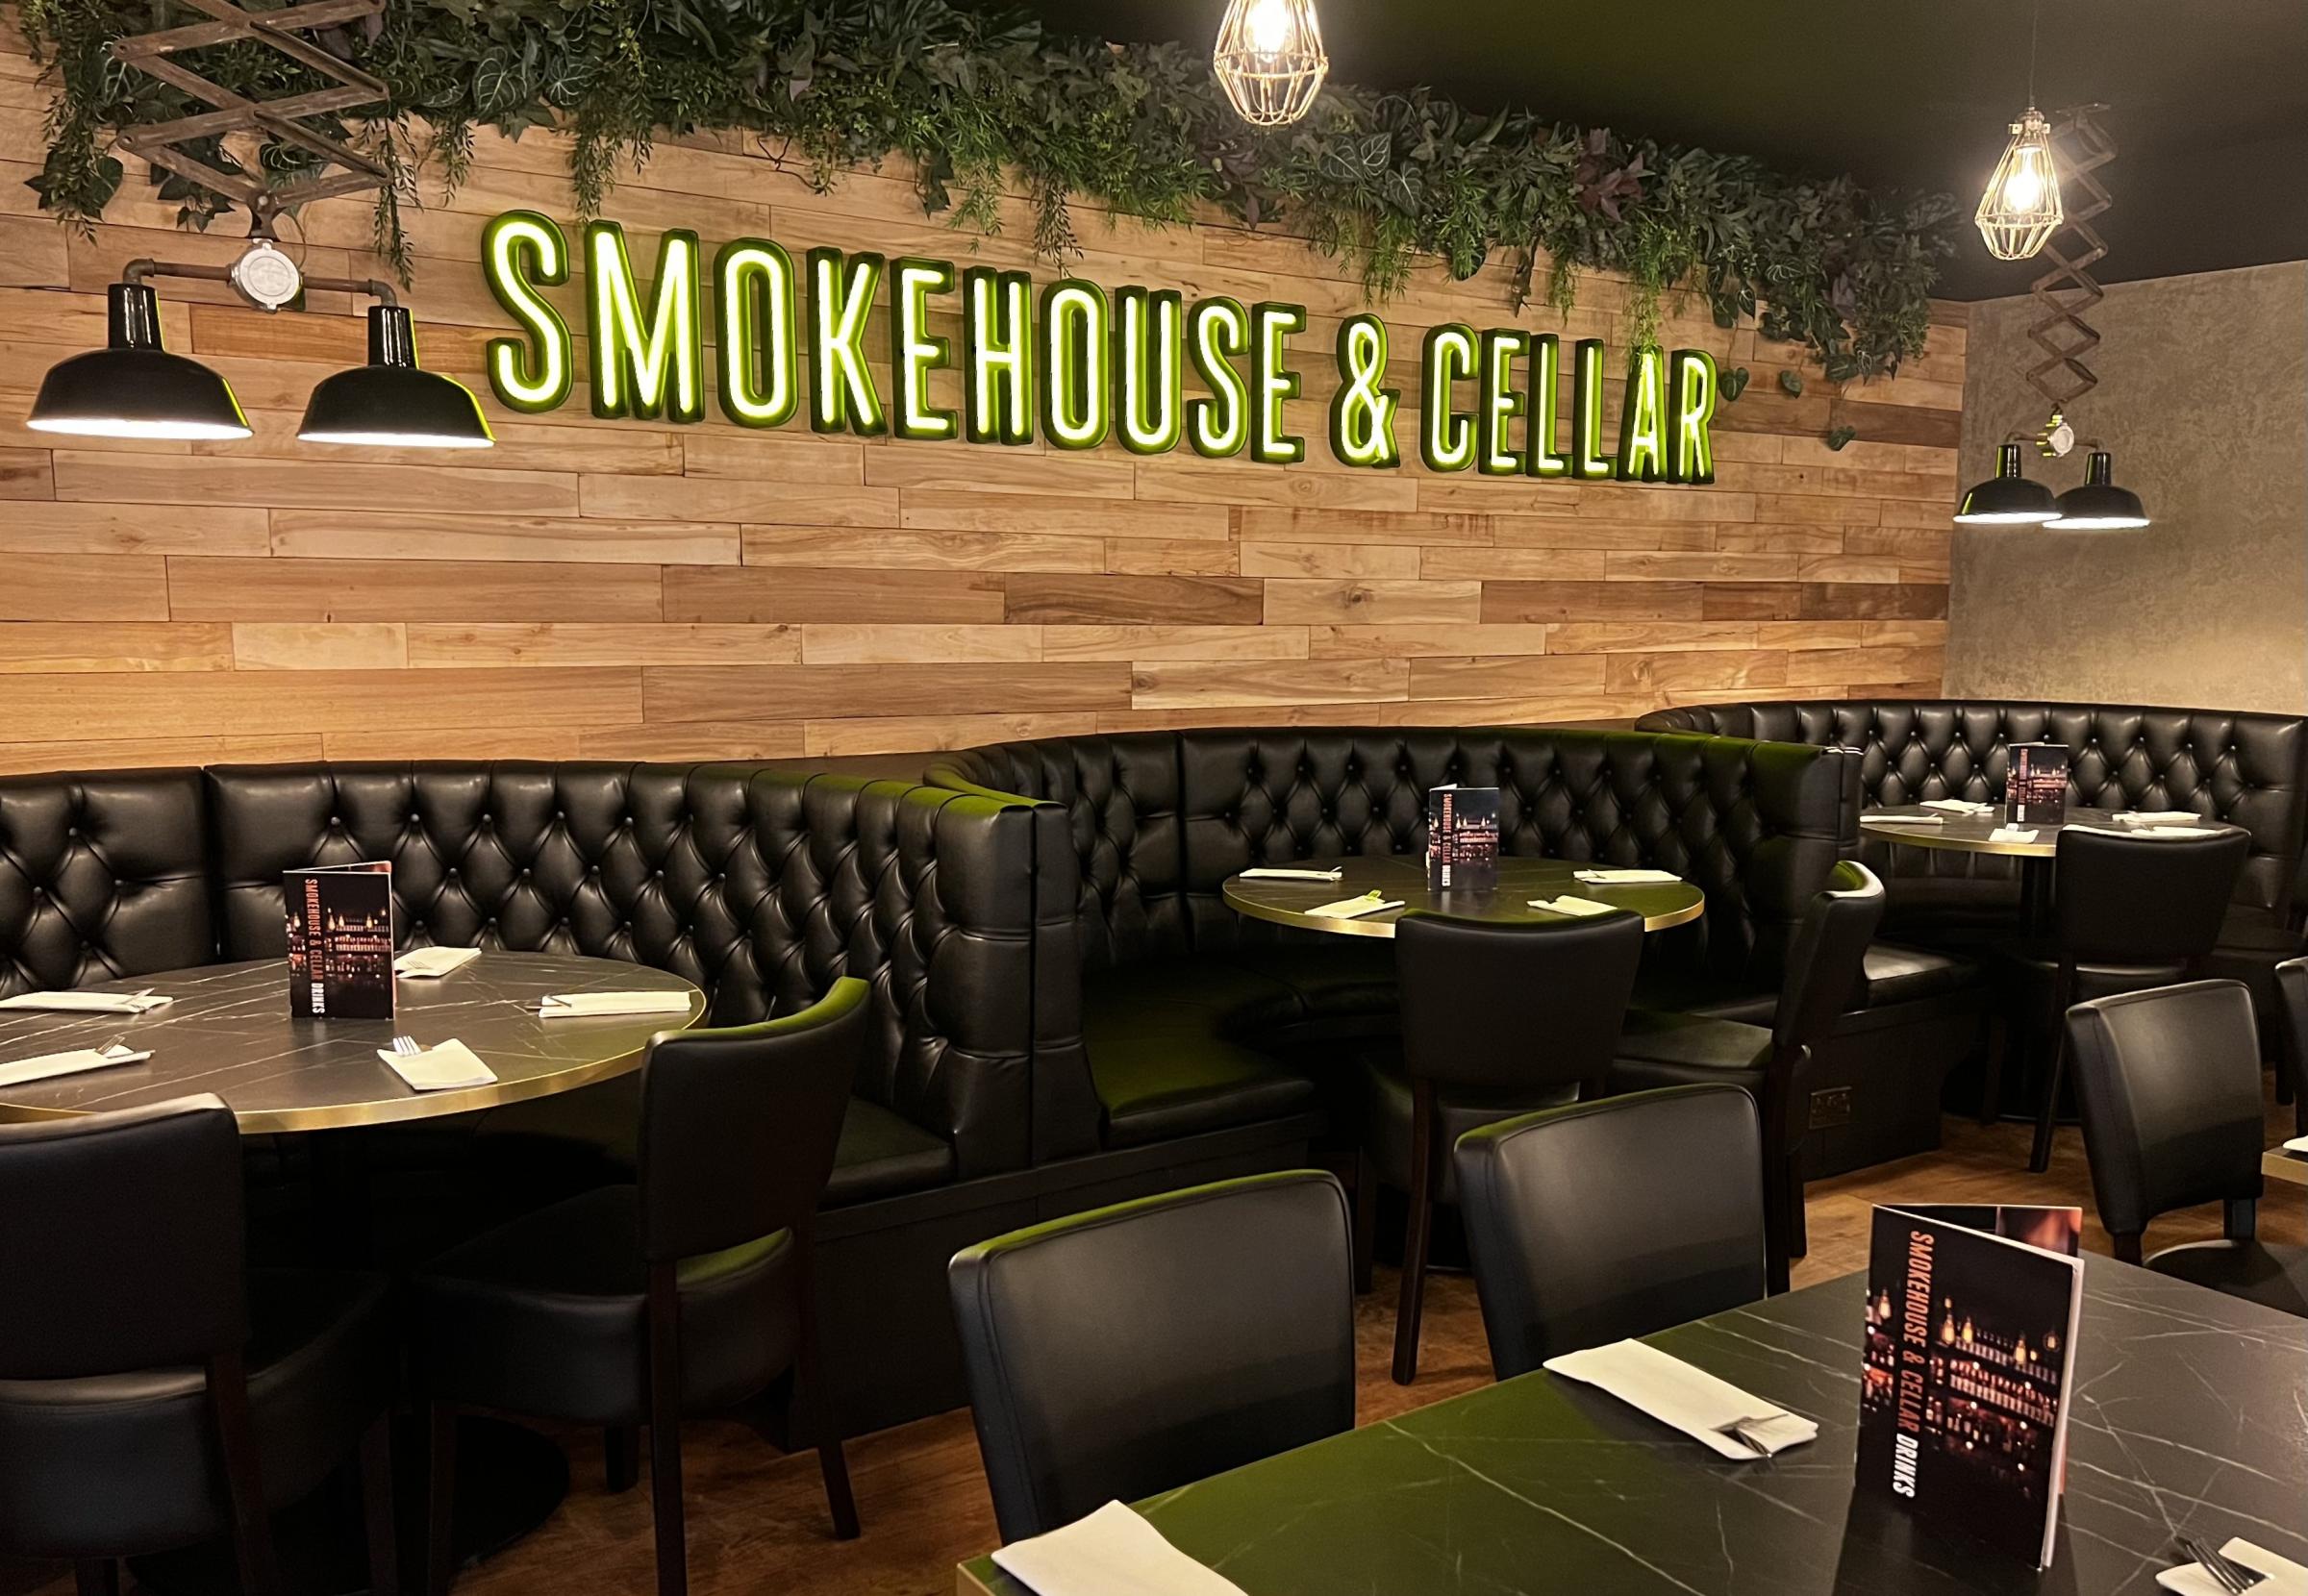 Smokehouse & Cellar opened on Regent Street in February